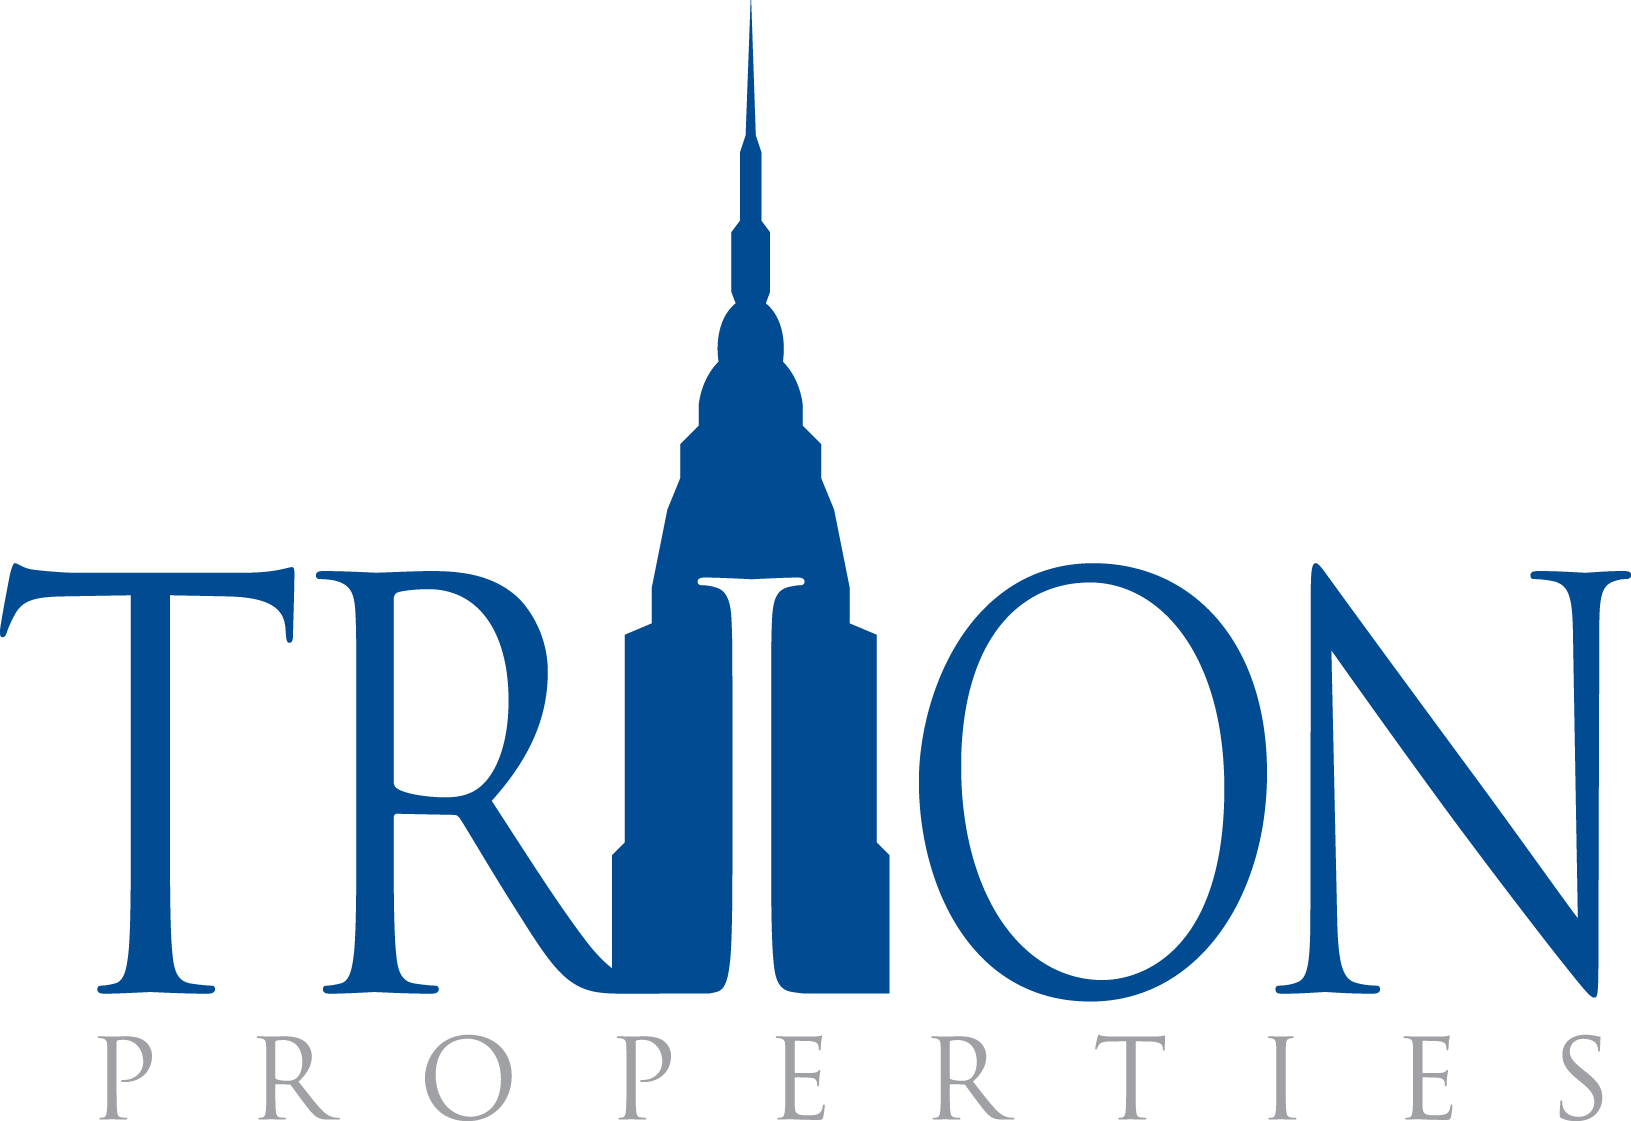 Trion_Logo-1